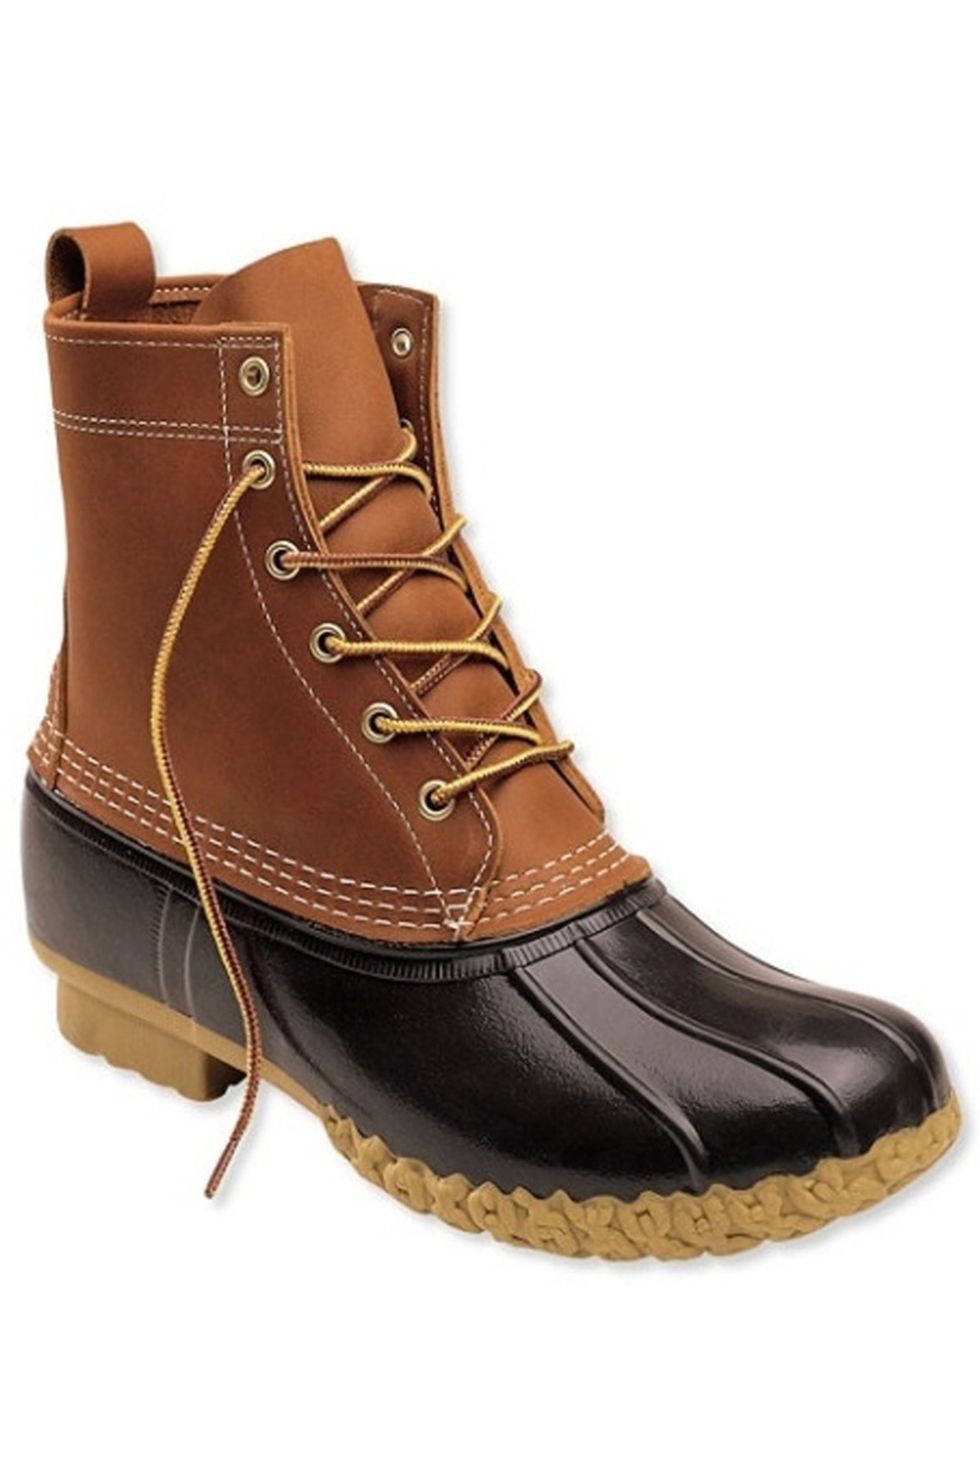 Footwear, Boot, Shoe, Brown, Work boots, Tan, Hiking boot, Beige, Snow boot, Durango boot, 